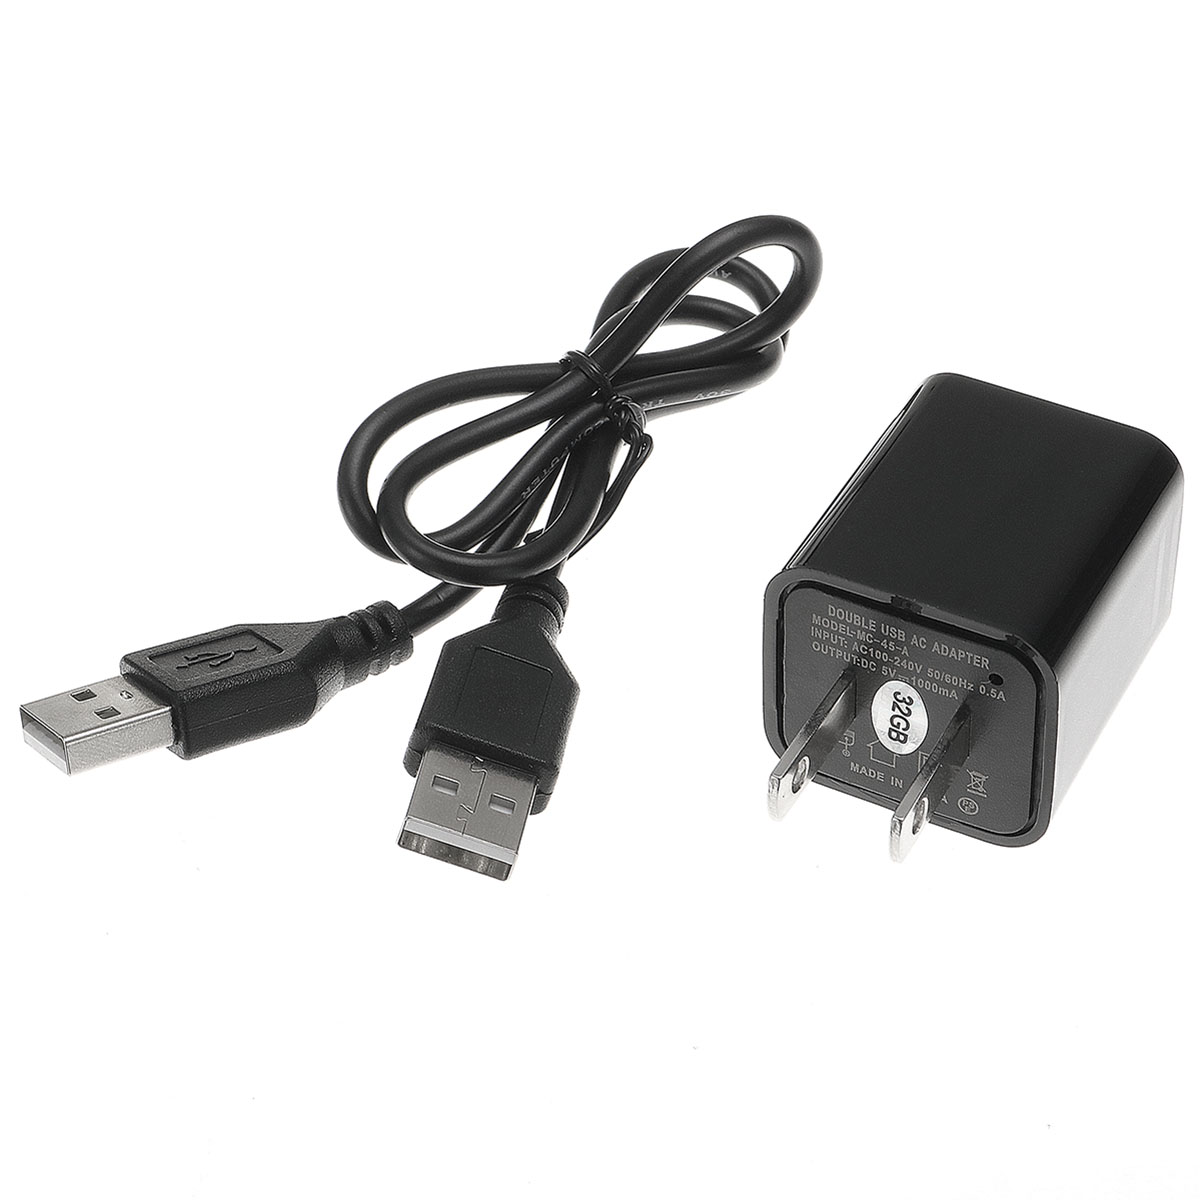 32GB-1080P-HD-USB-Charger-Adapter-Mini-Motion-Hidden-Camera-DVR-Security-US-Plug-1168423